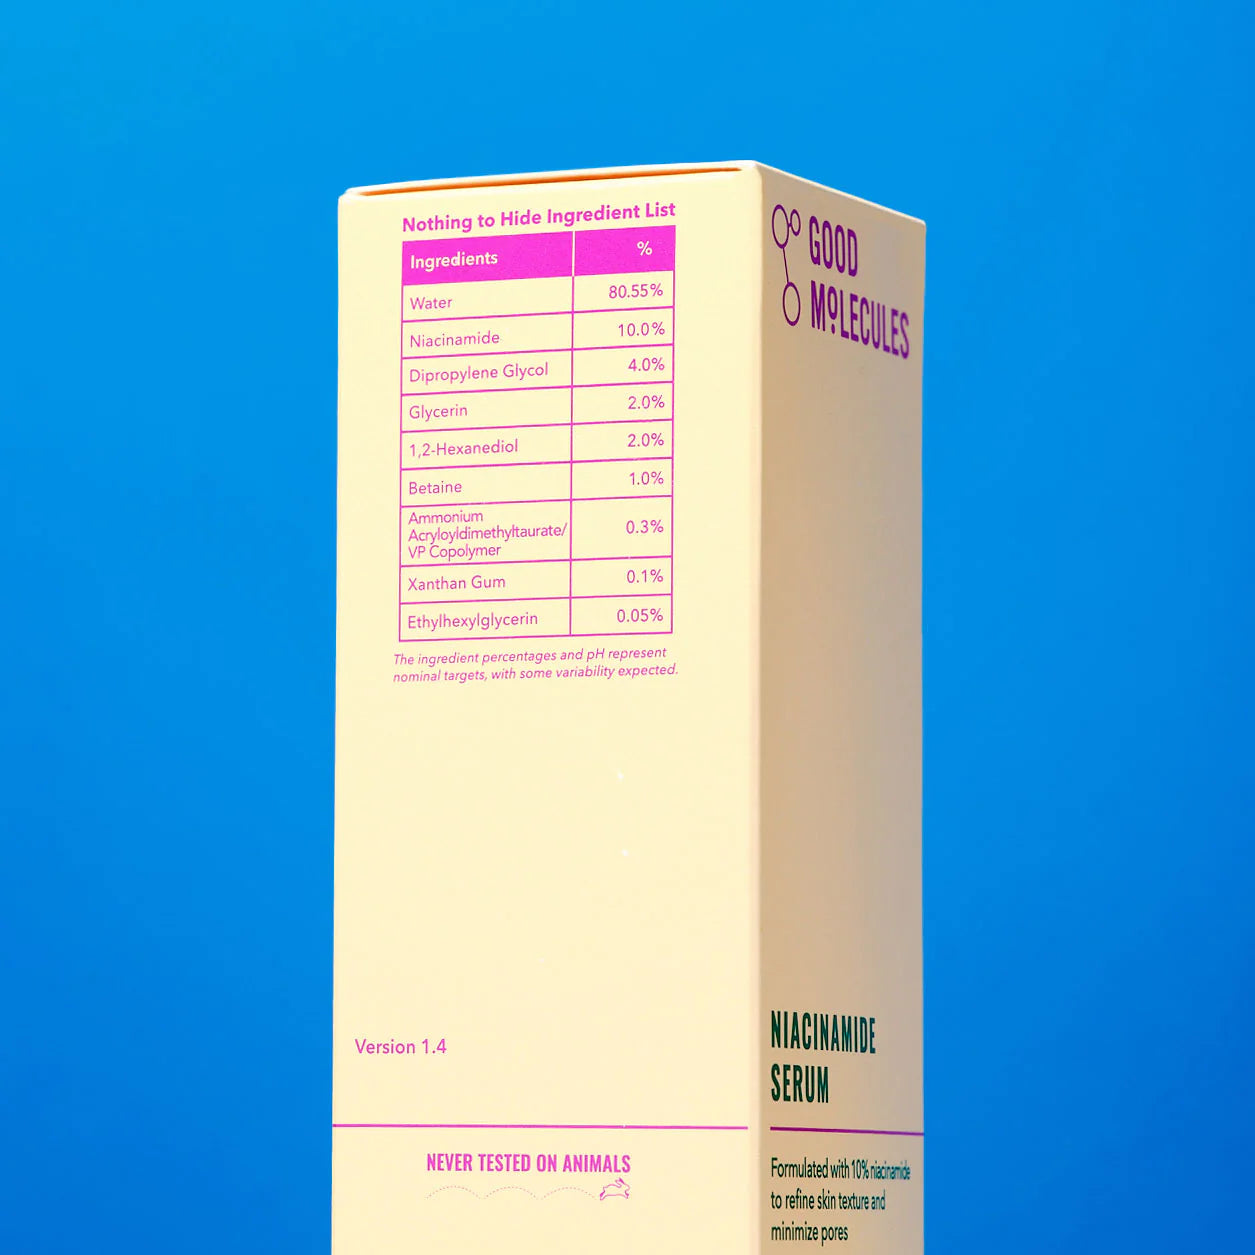 Niacinamide Serum - 30 ml